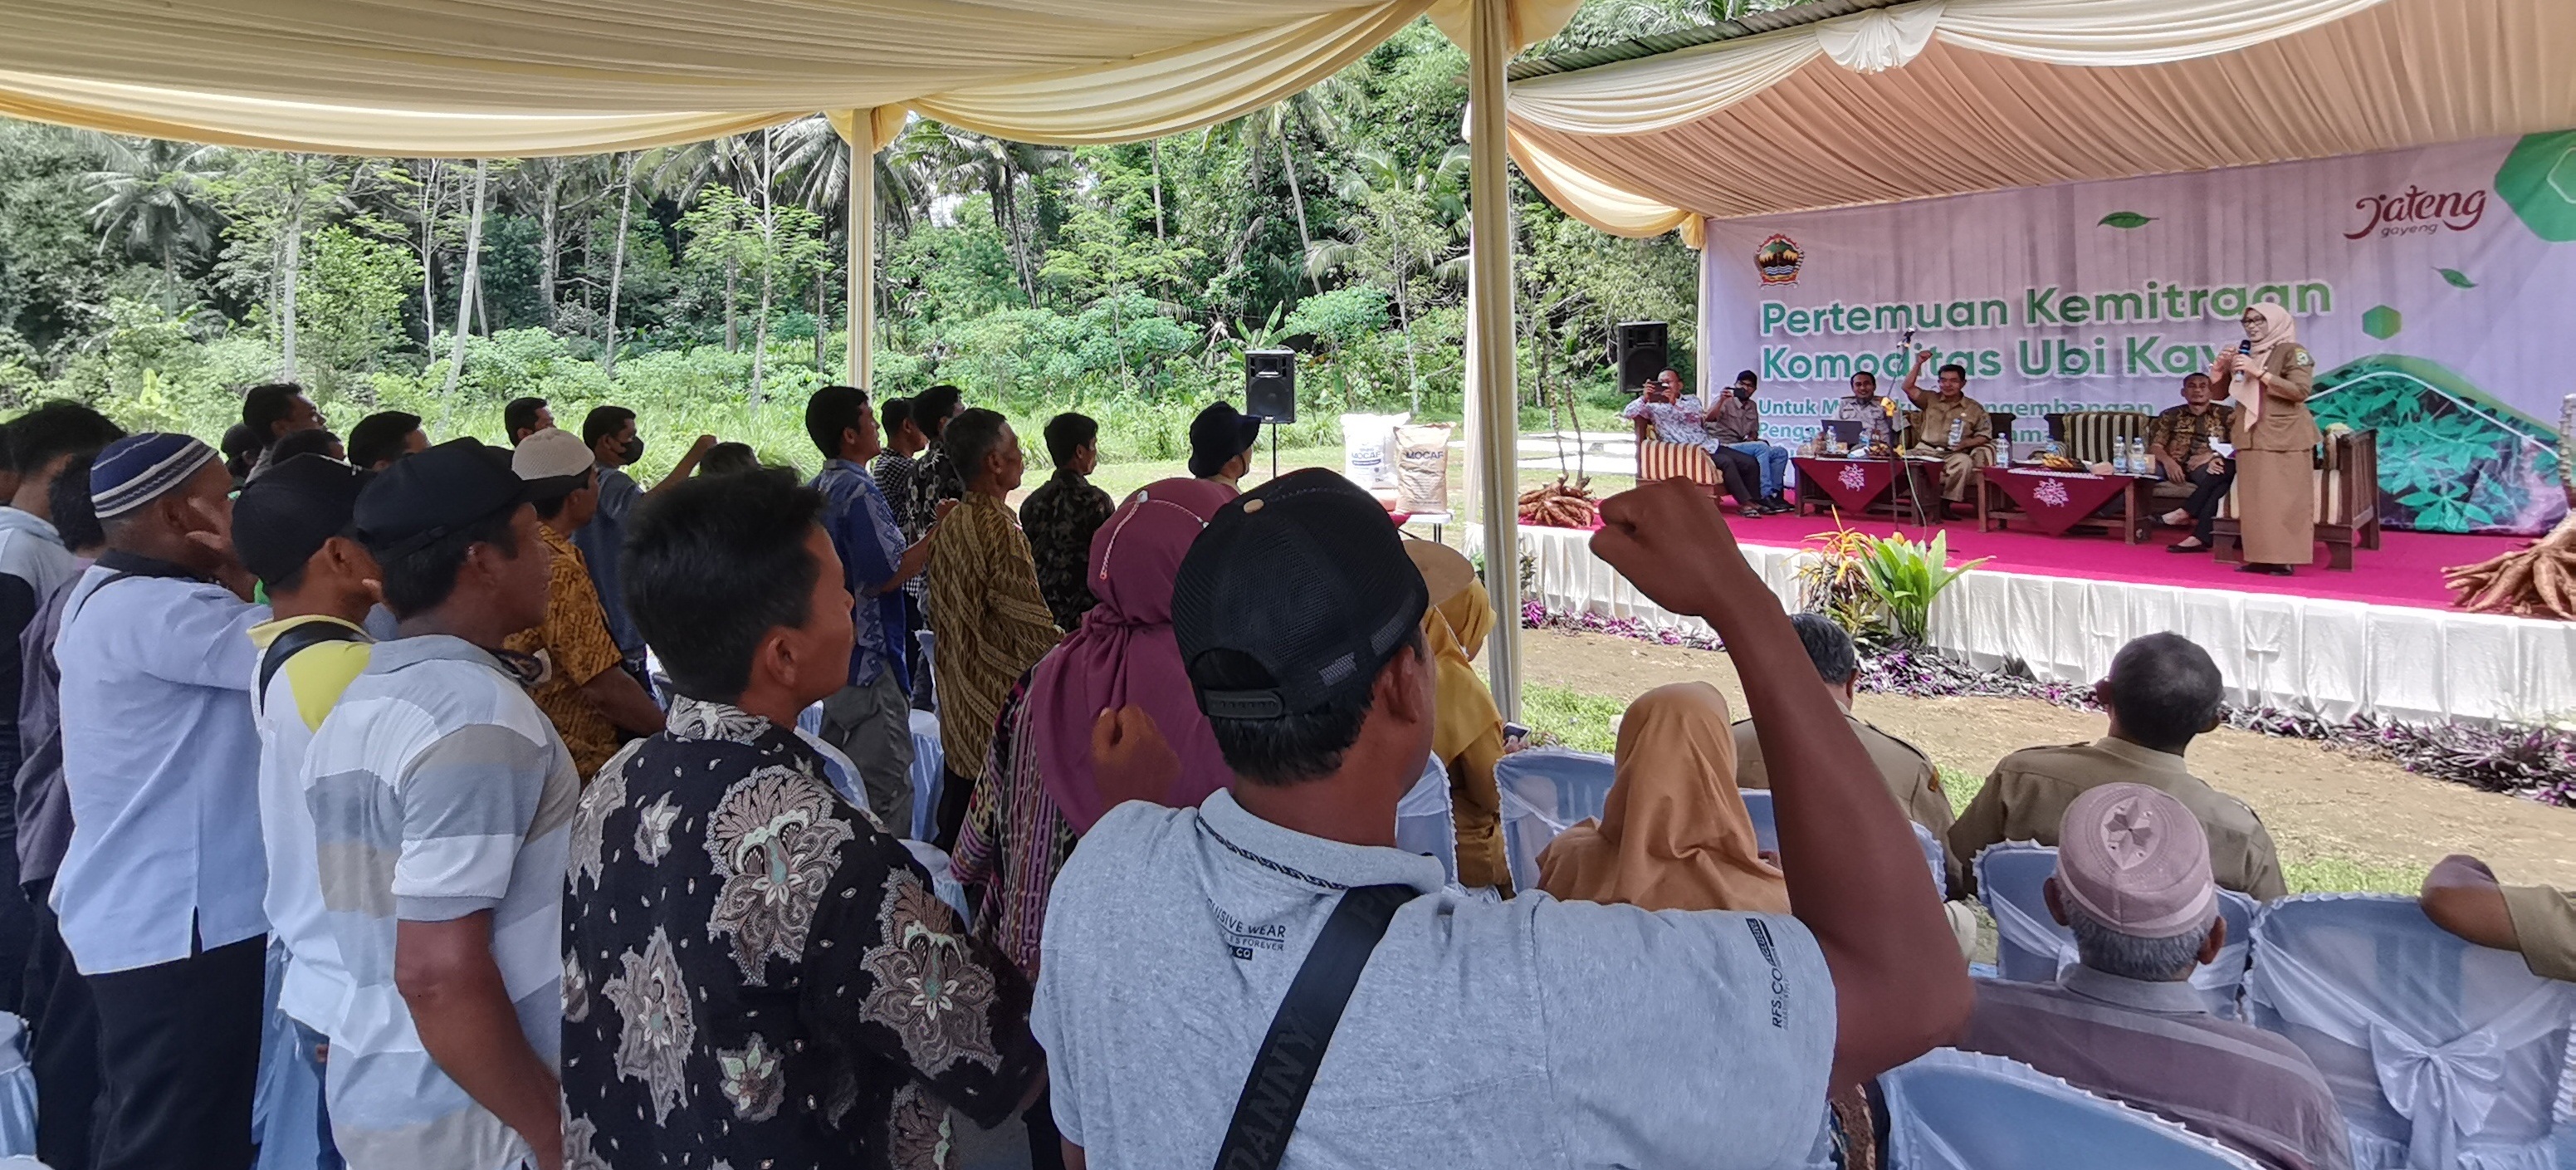 Di Banjarnegara, Petani Singkong Protes Tak Dapat Pupuk Bersubsidi, Tepung Mocaf Kerek Harga Singkong 